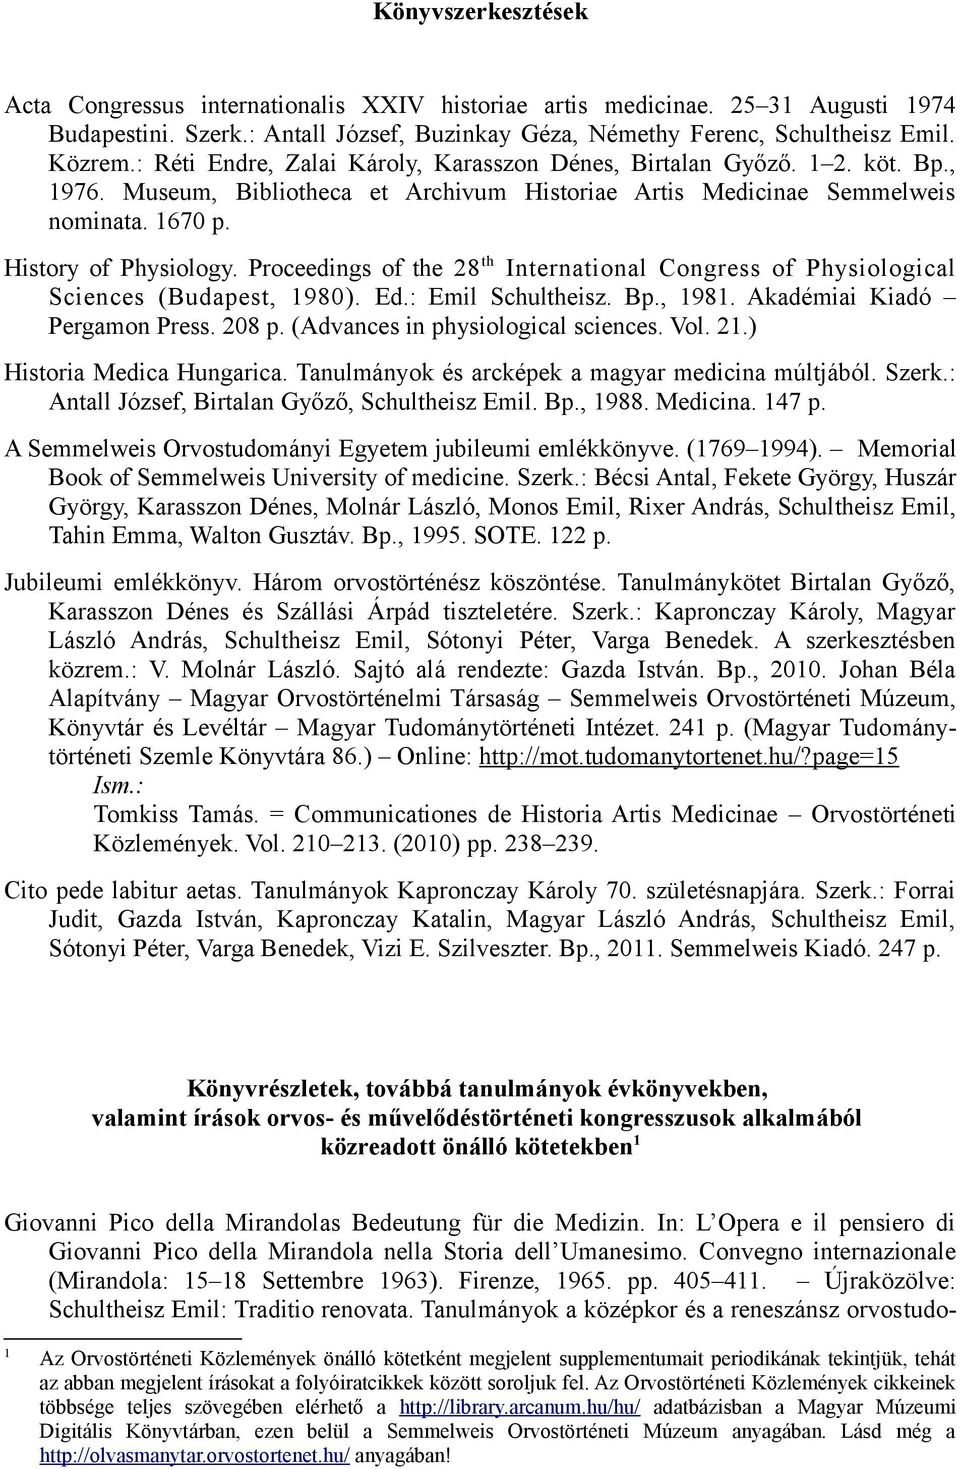 Proceedings of the 28 th International Congress of Physiological Sciences (Budapest, 1980). Ed.: Emil Schultheisz. Bp., 1981. Akadémiai Kiadó Pergamon Press. 208 p.